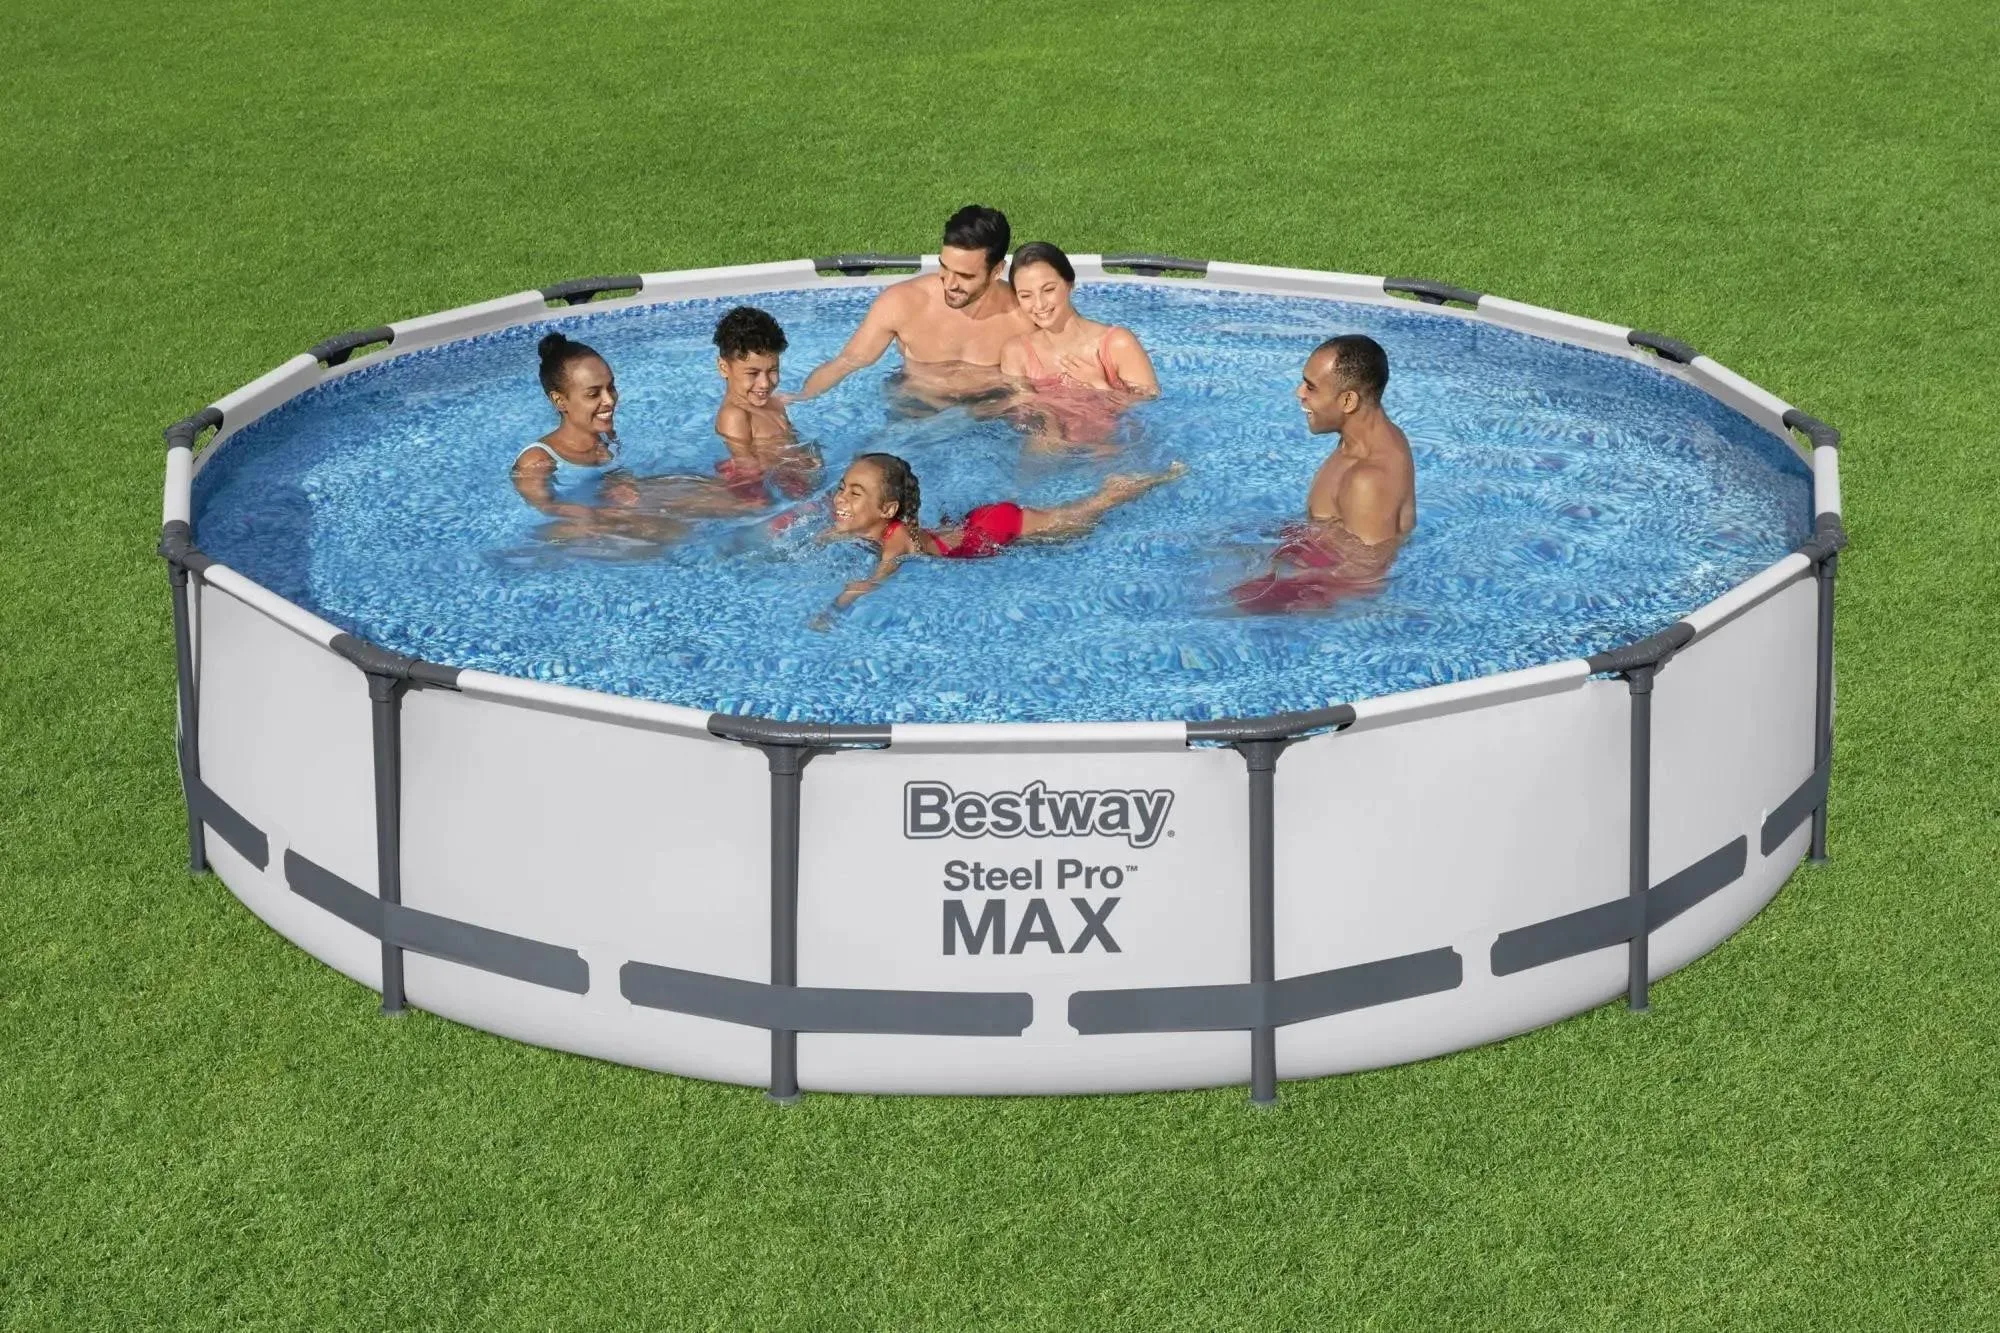 Bestway 56597E Steel Pro MAX Ground Pool, 14-Feet by 33-inch, Blue